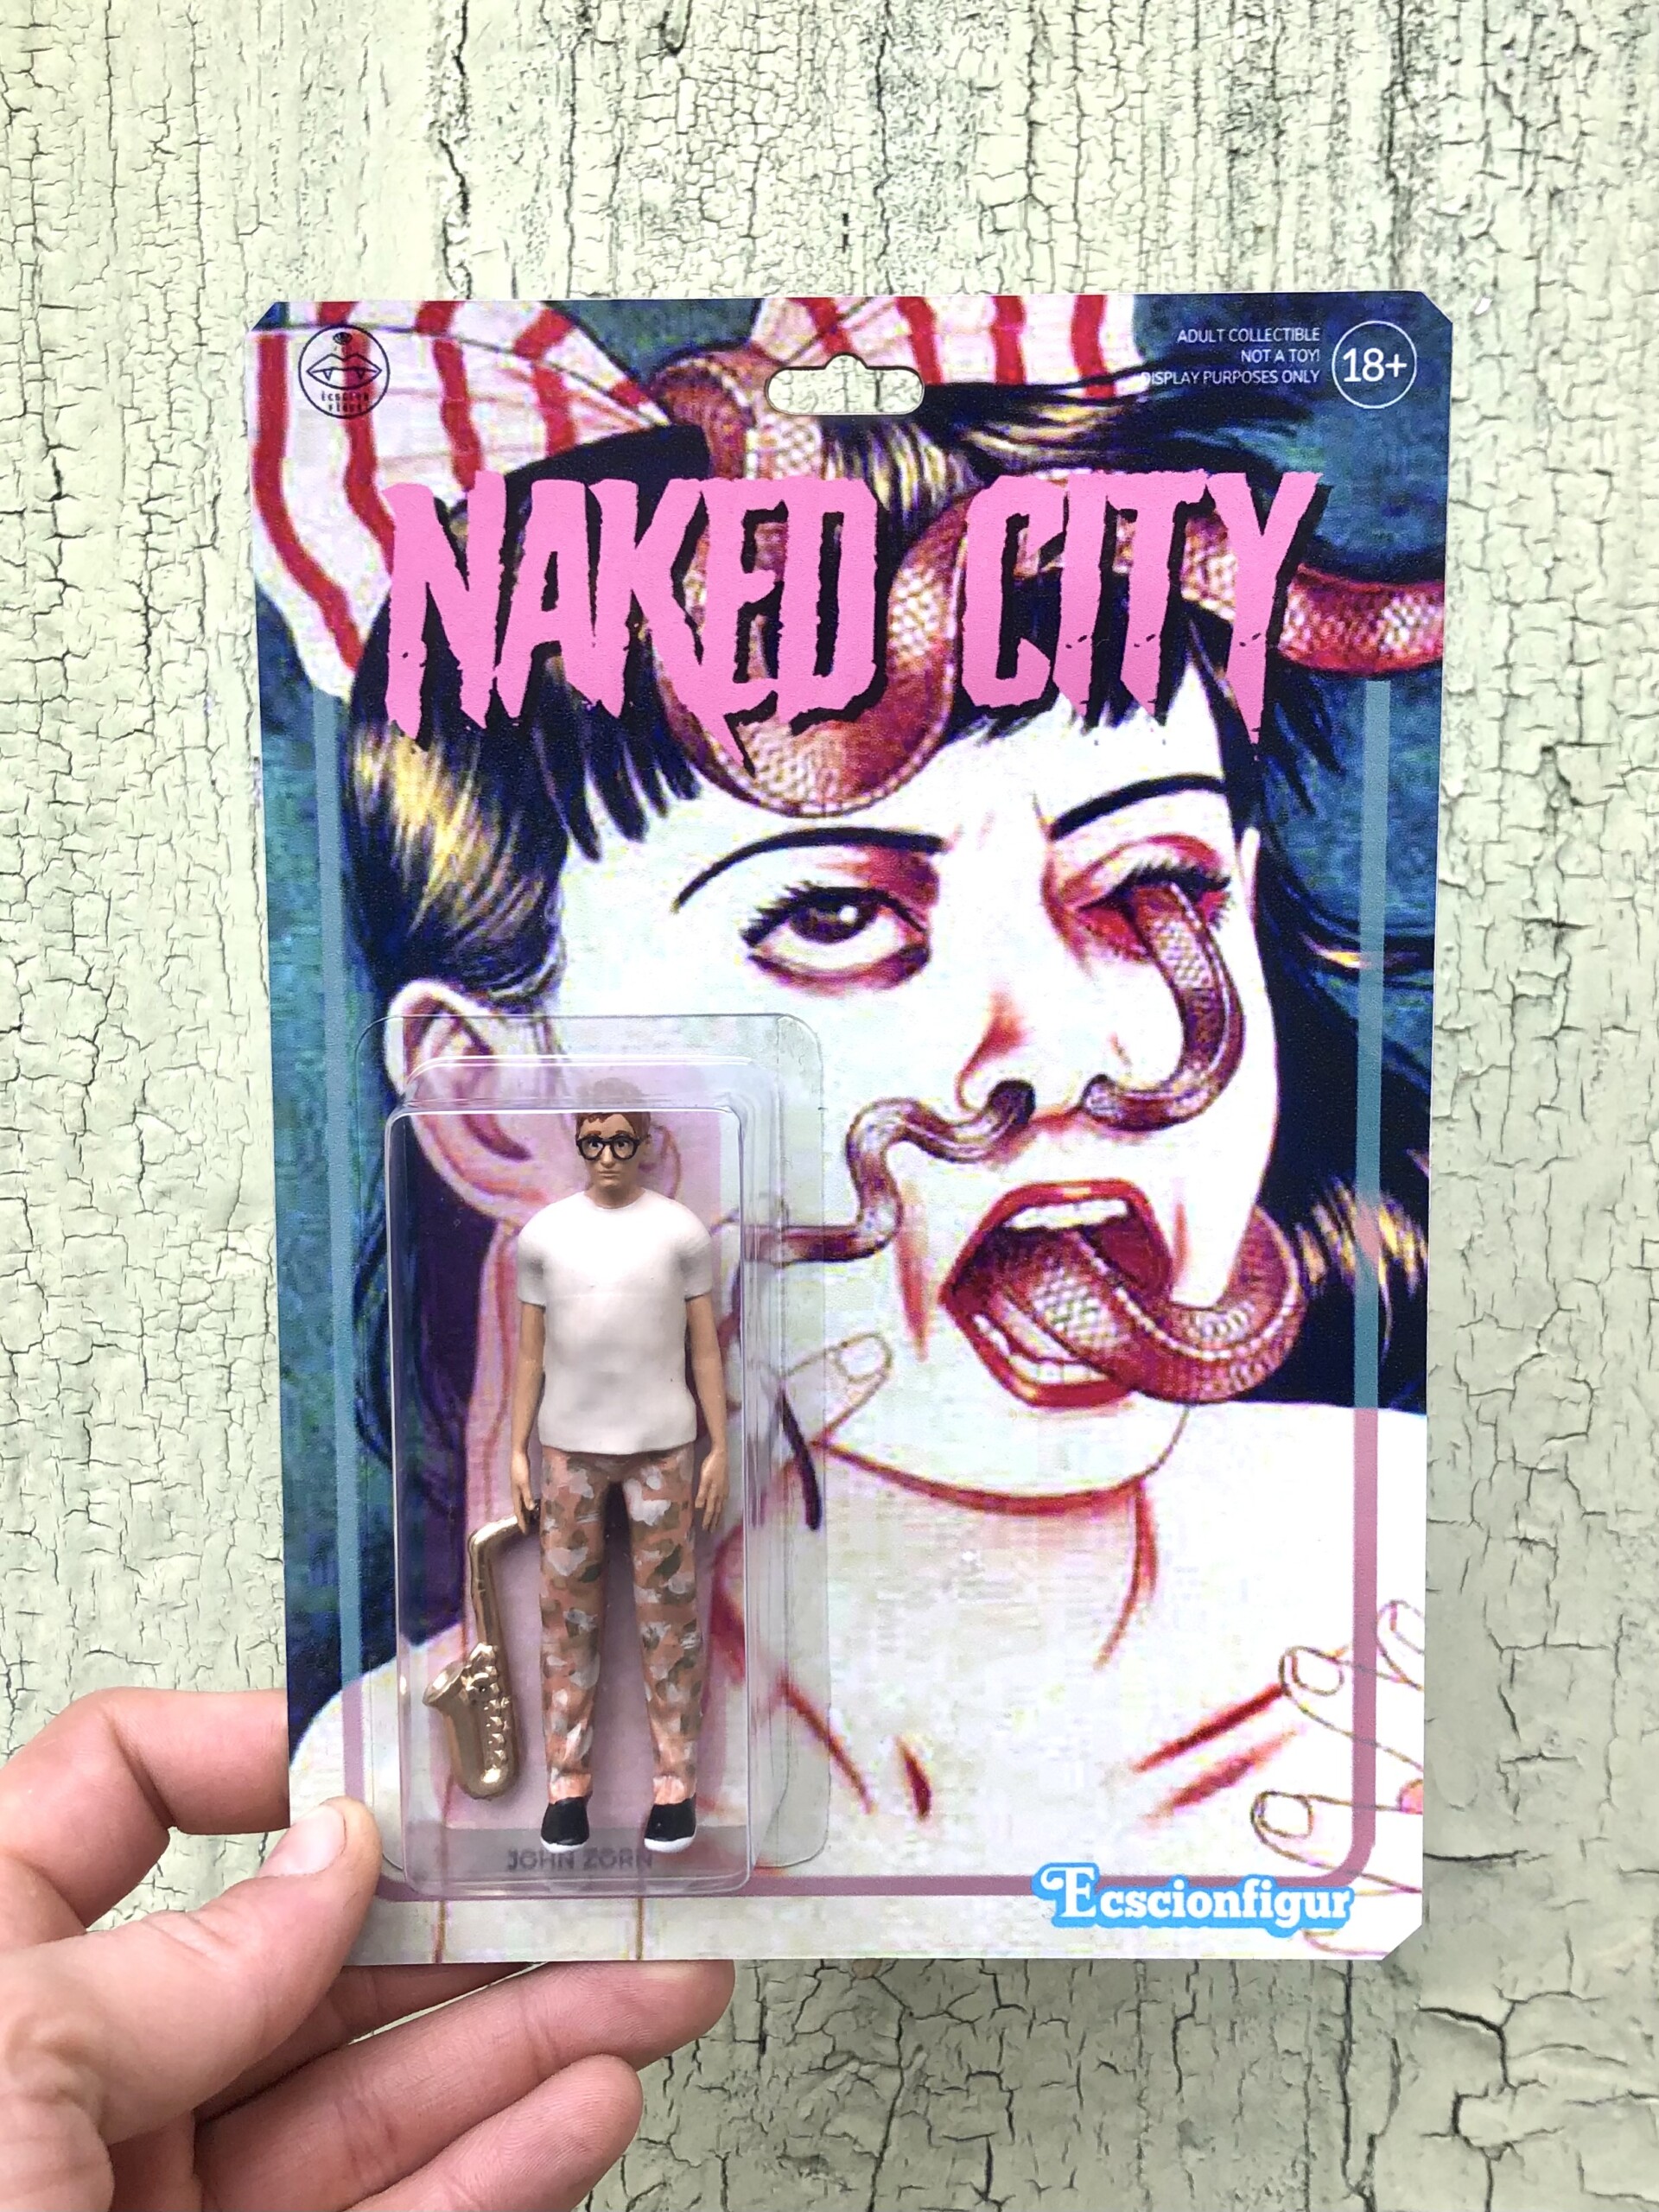 John Zorn, Naked city 【送料無料/新品】 - その他